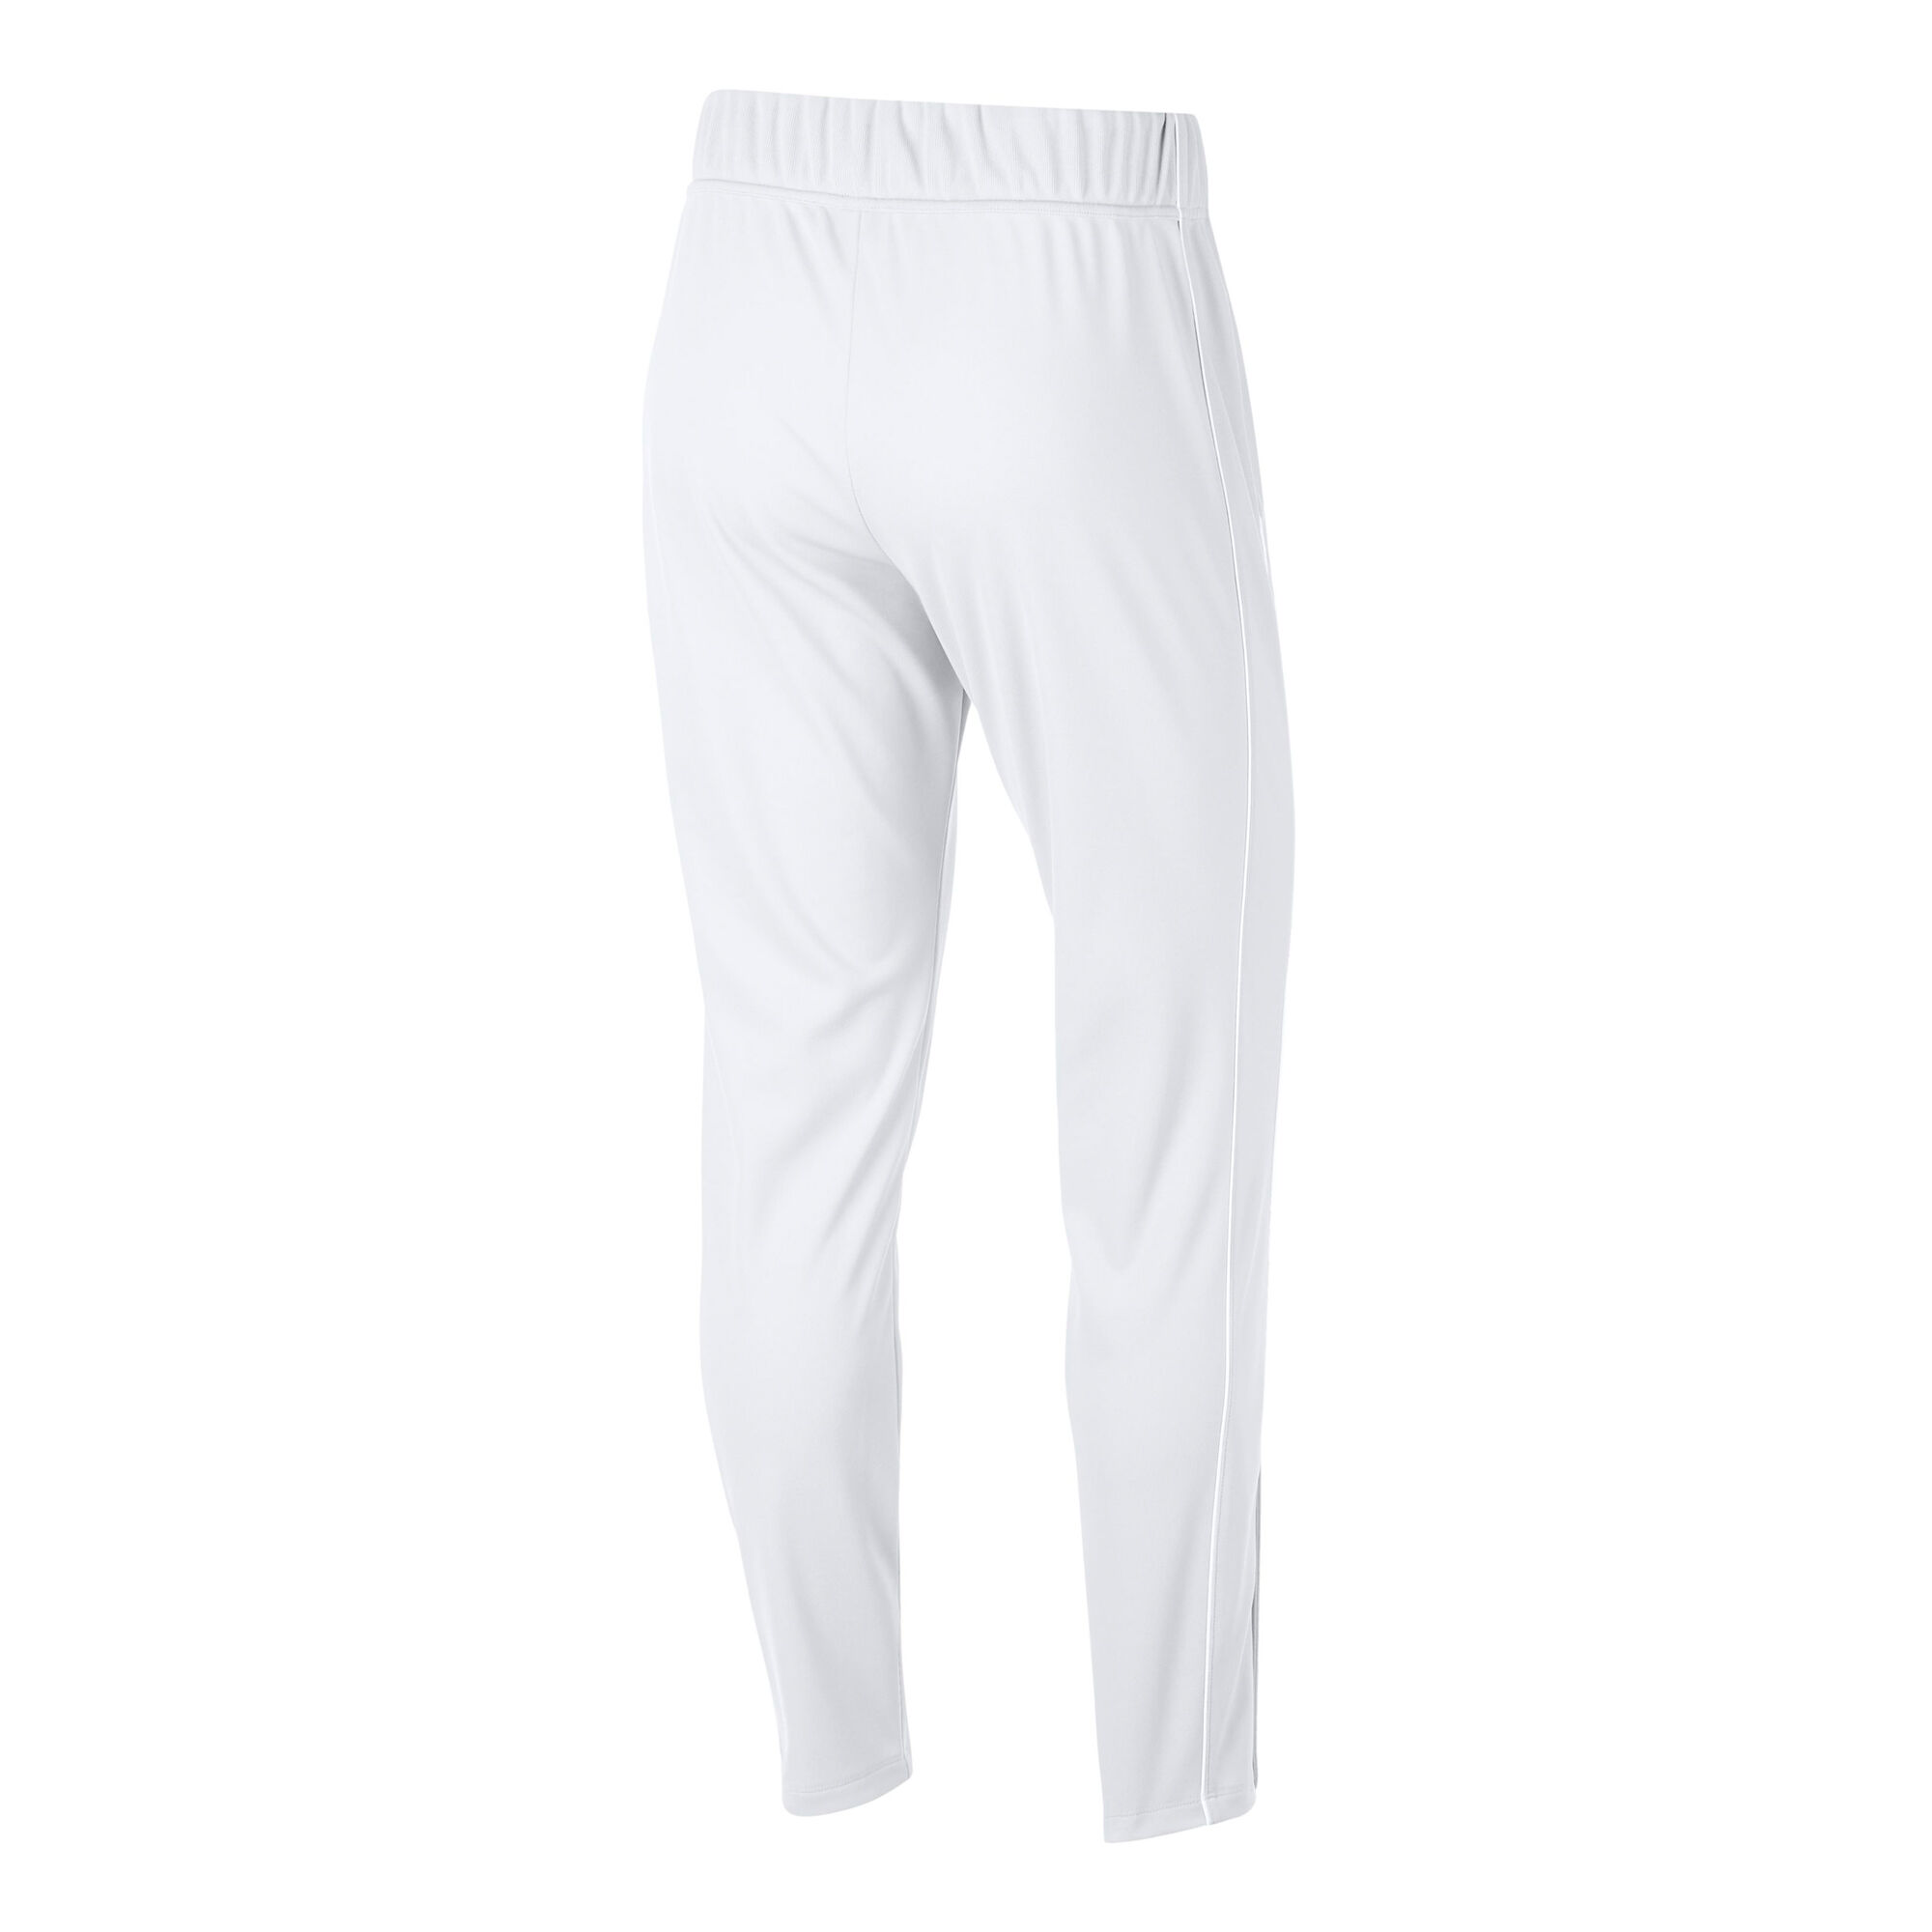 buy Nike Court Training Pants Women - White online | Tennis-Point